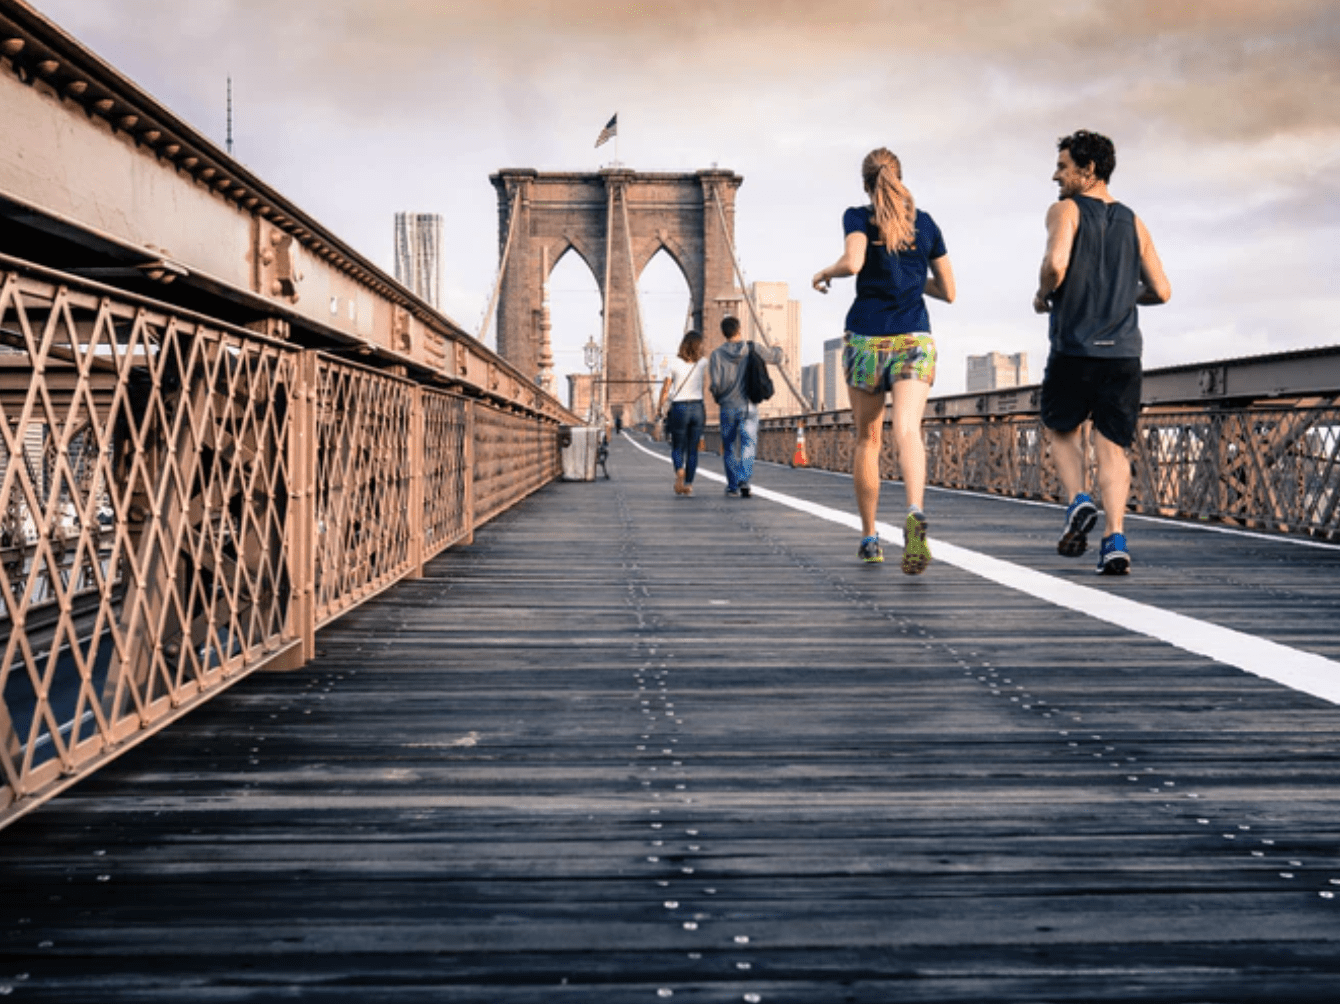 Joggers on the Brooklyn Bridge in New York City; image by Curtis MacNewton, via Unsplash.com.